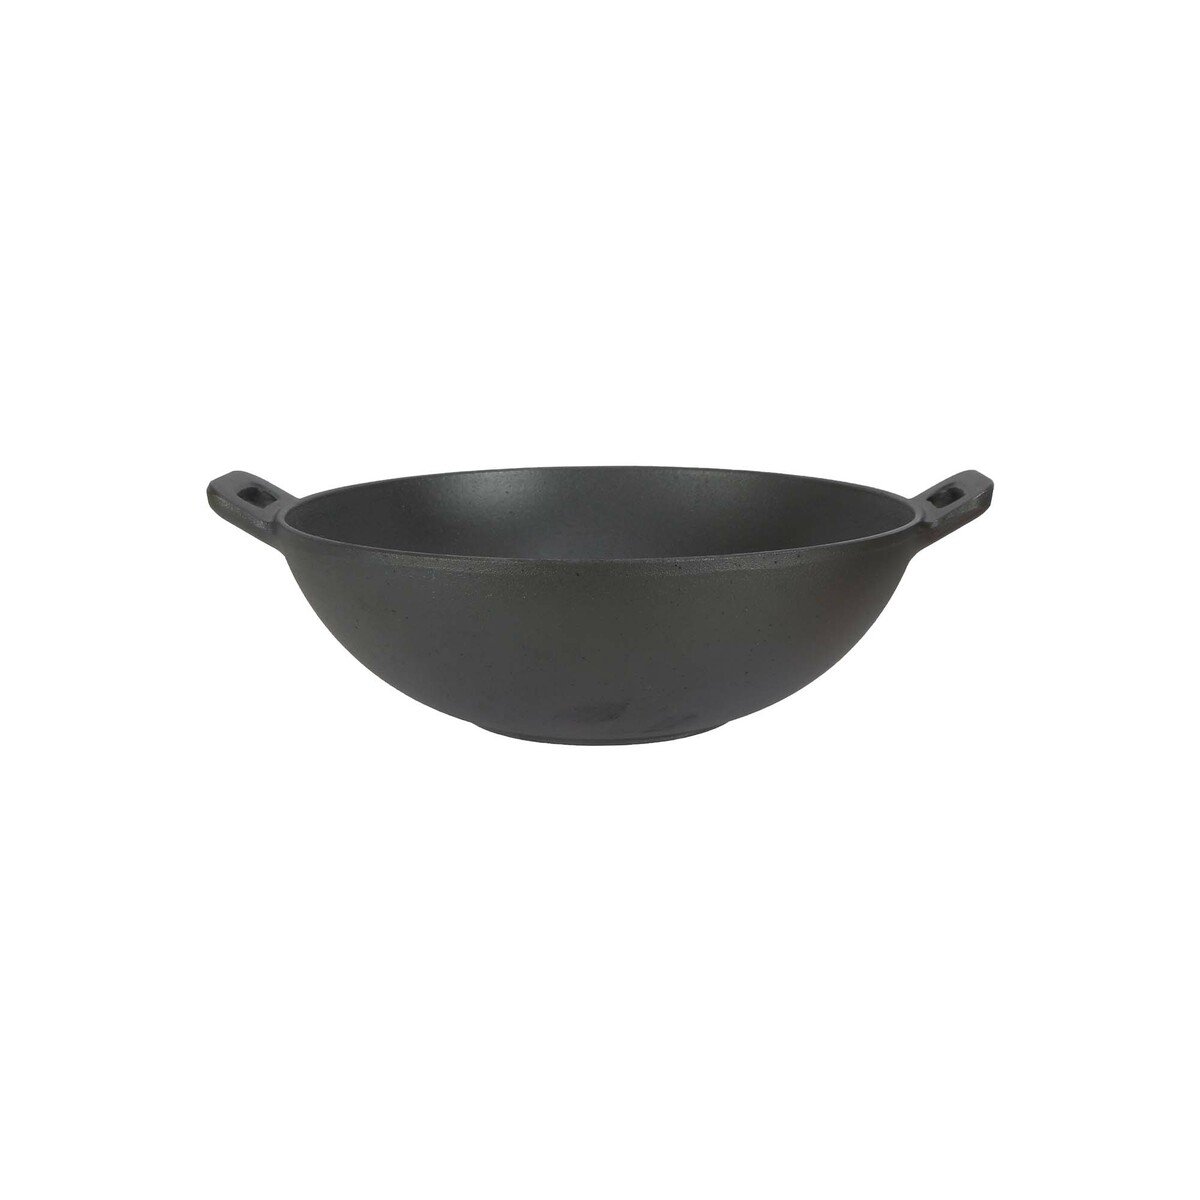 Chefline Cast Iron Wok Pan, 24 cm, SSR059